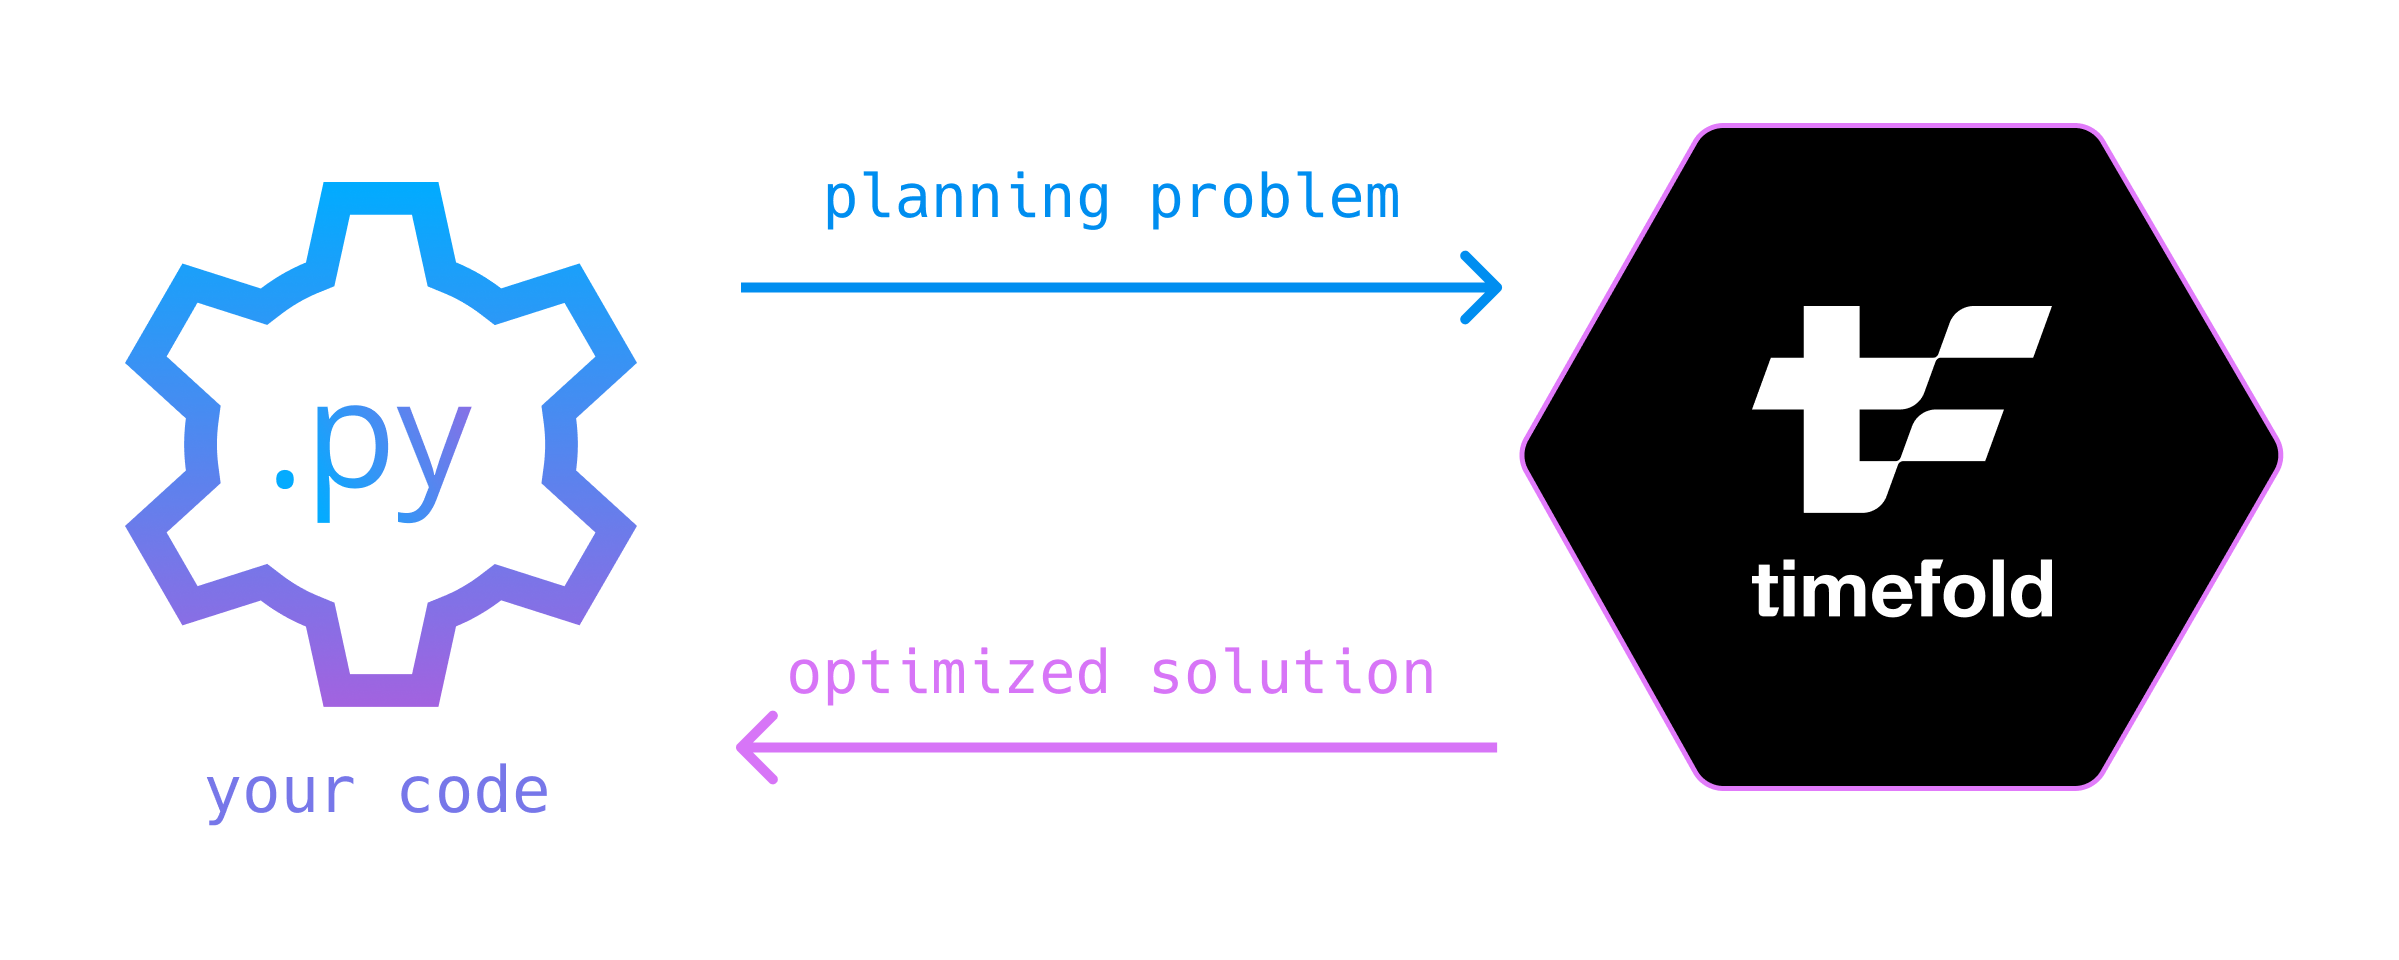 Timefold optimizes planning problems